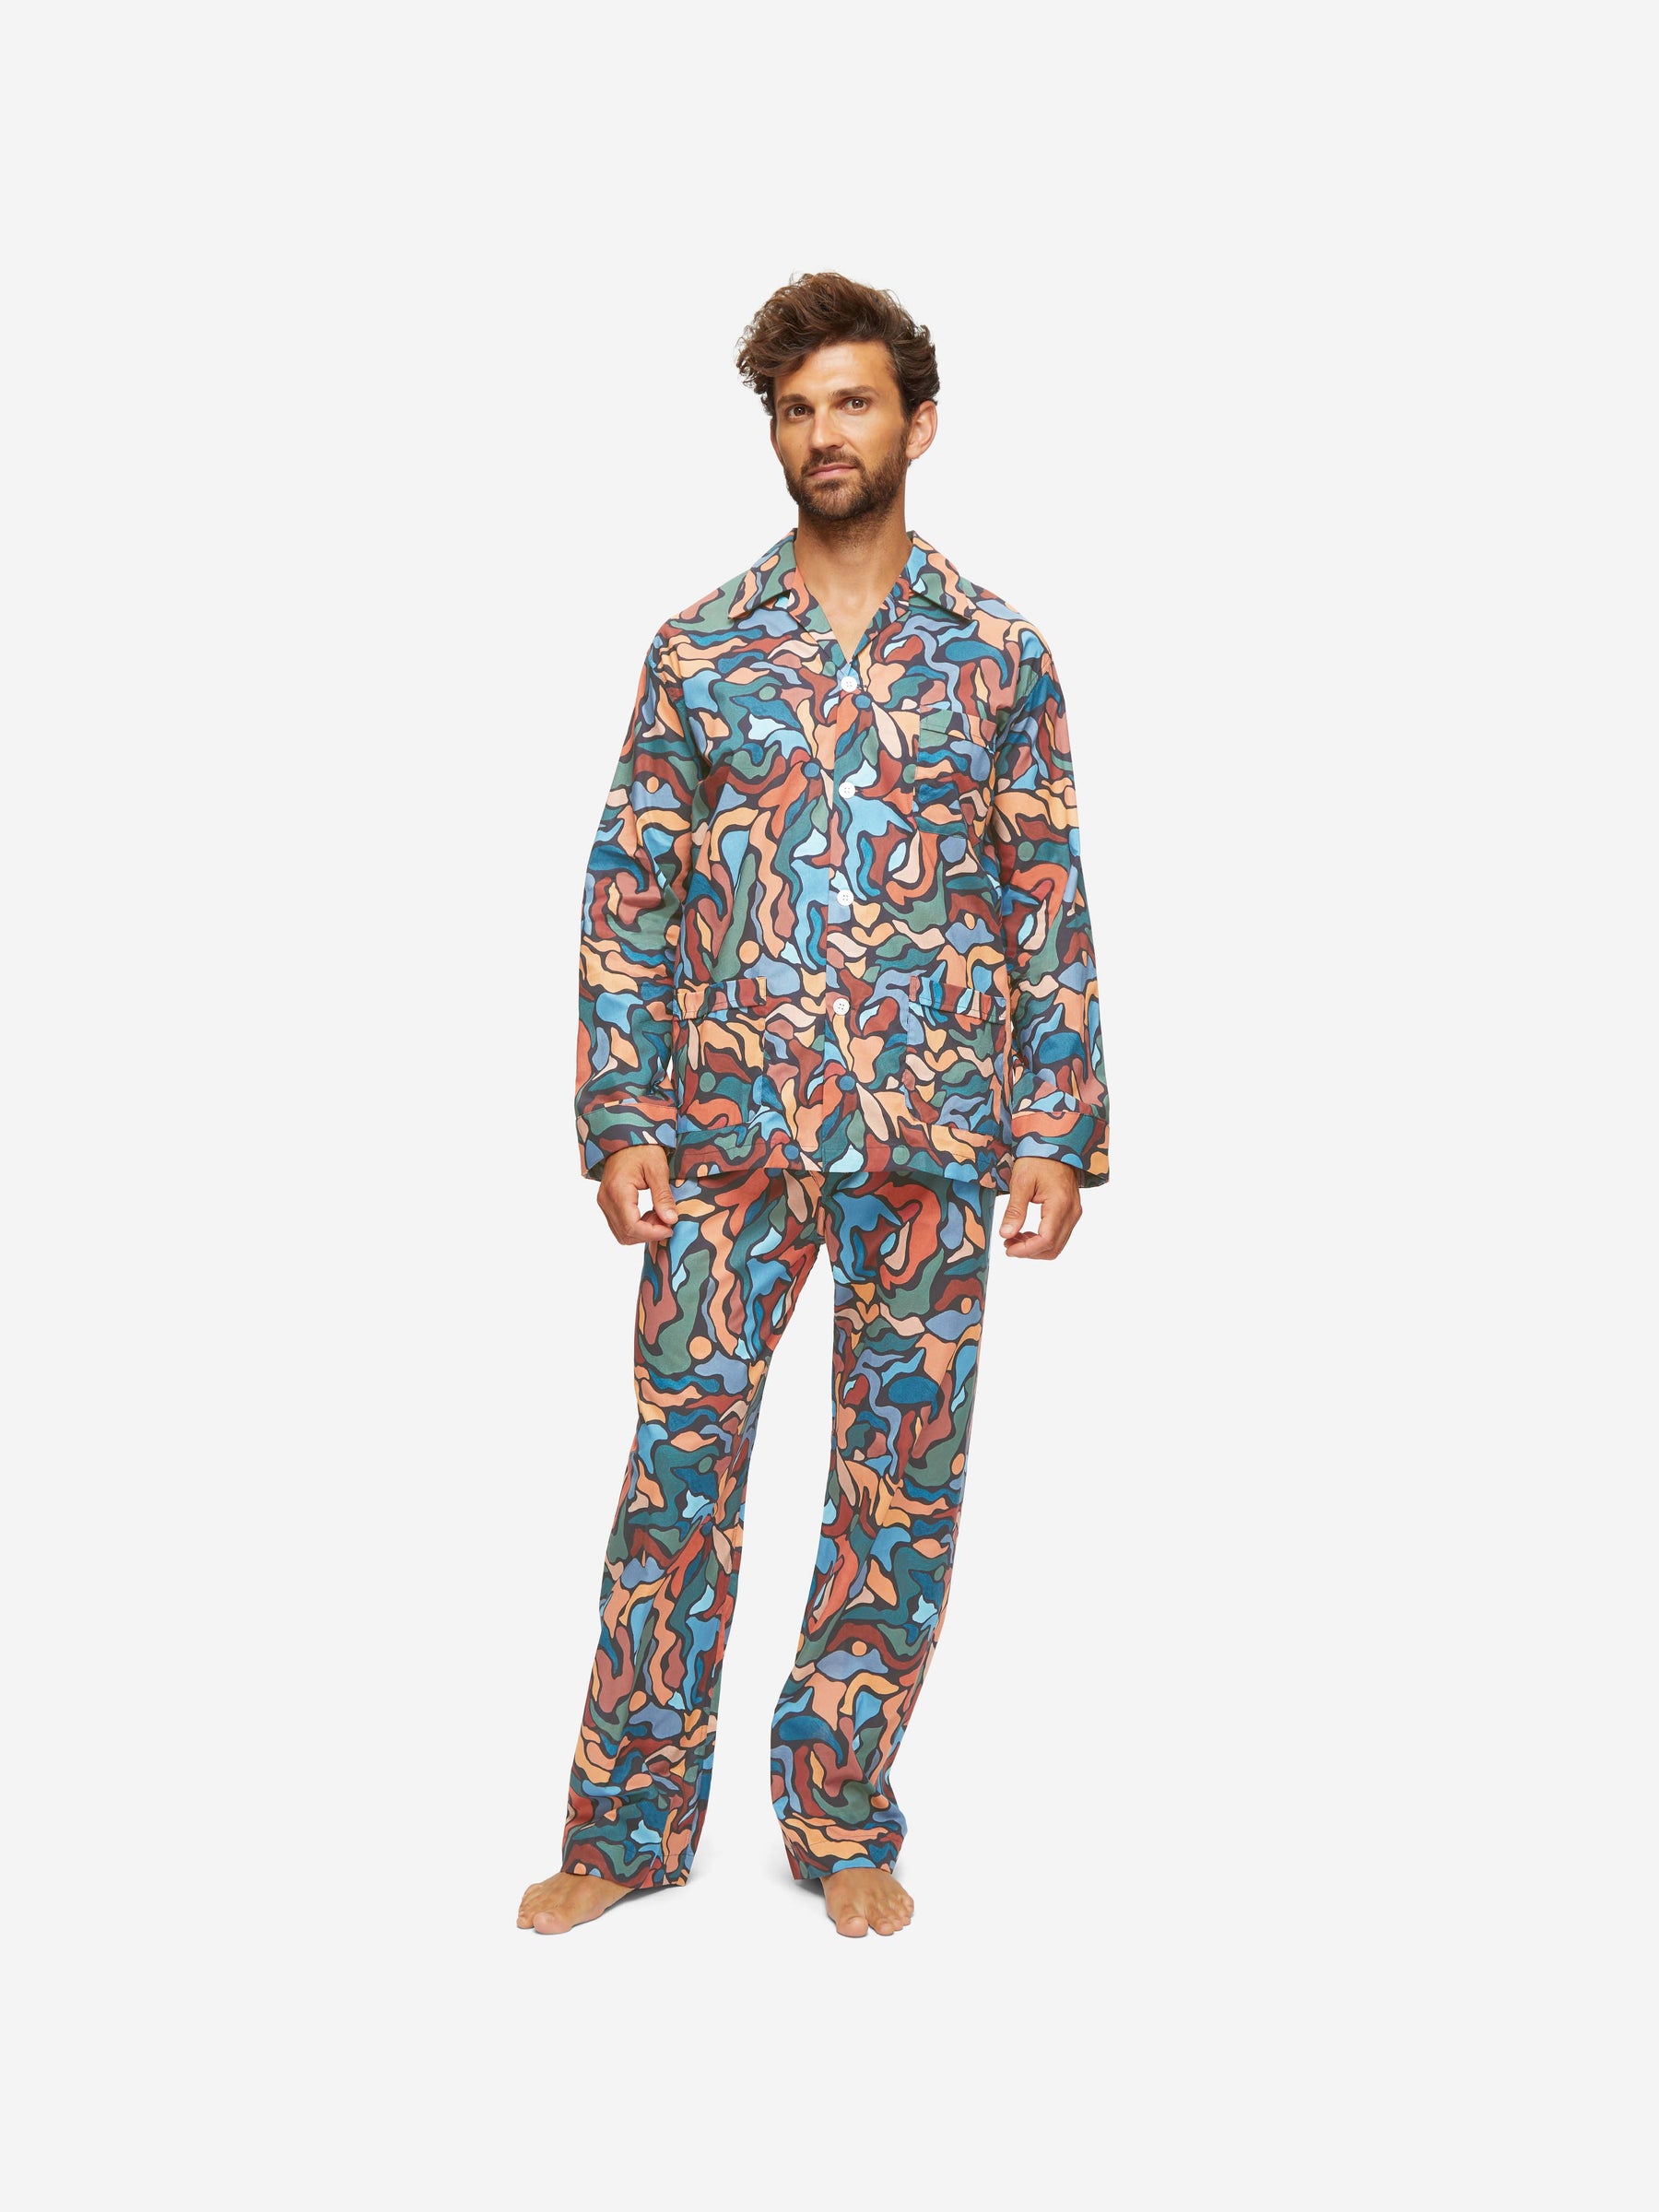 Men's Classic Fit Pyjamas Ledbury 61 Cotton Batiste Multi